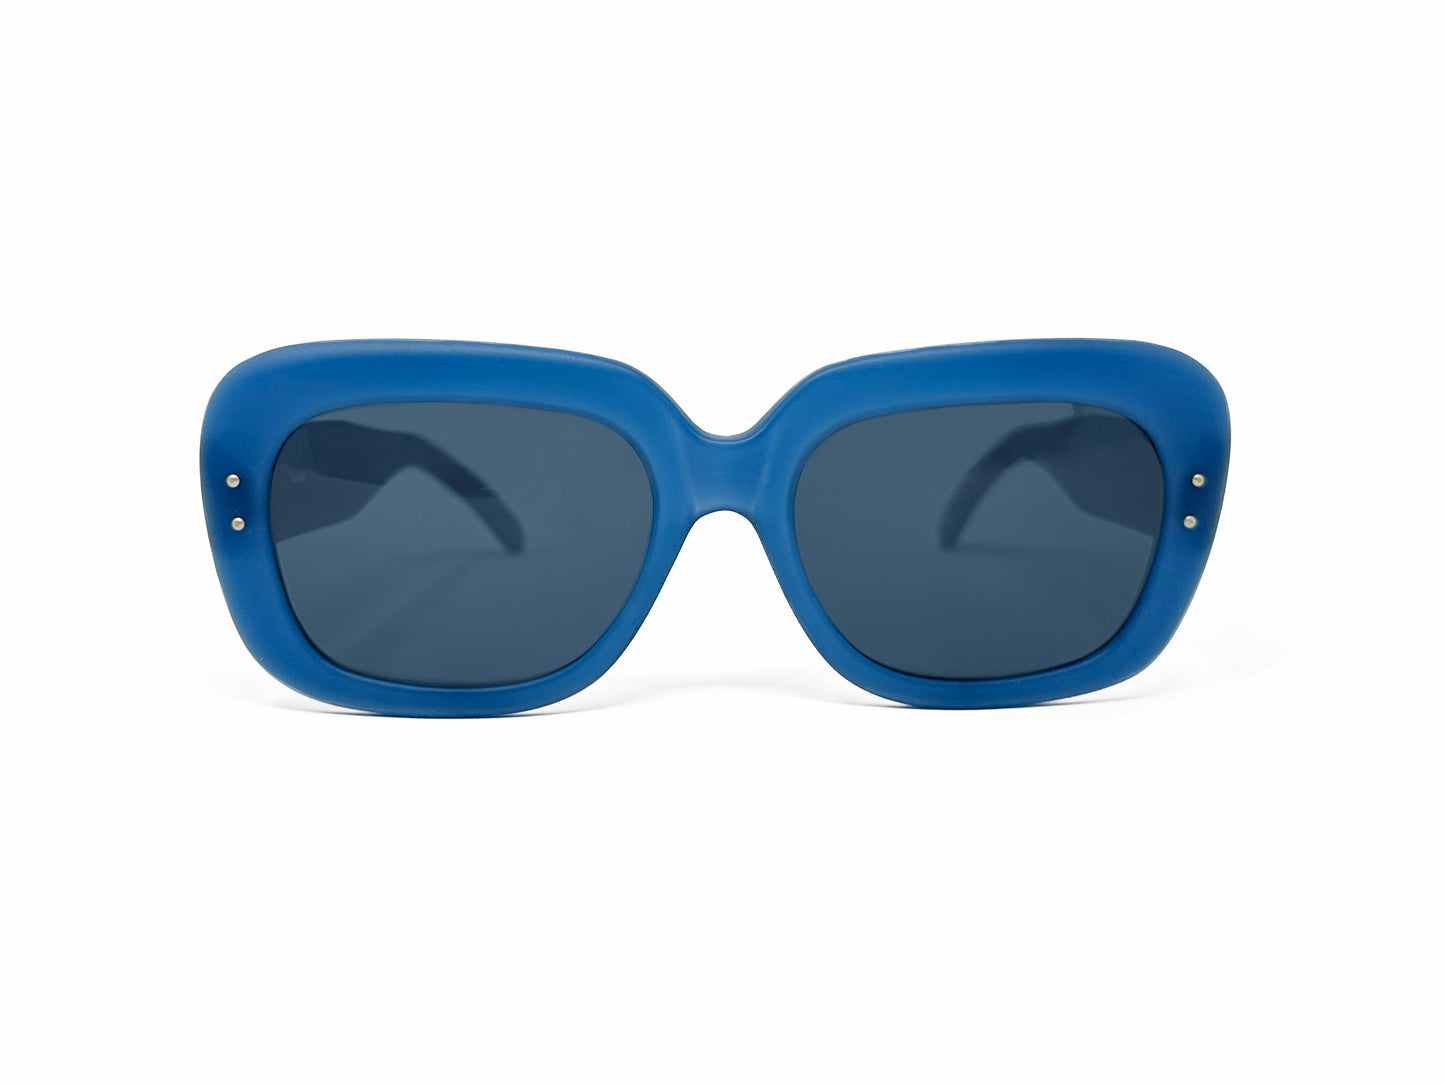 Kador rounded -square, plastic sunglasses. Model: M/1654. Color: Blue. Front view. 